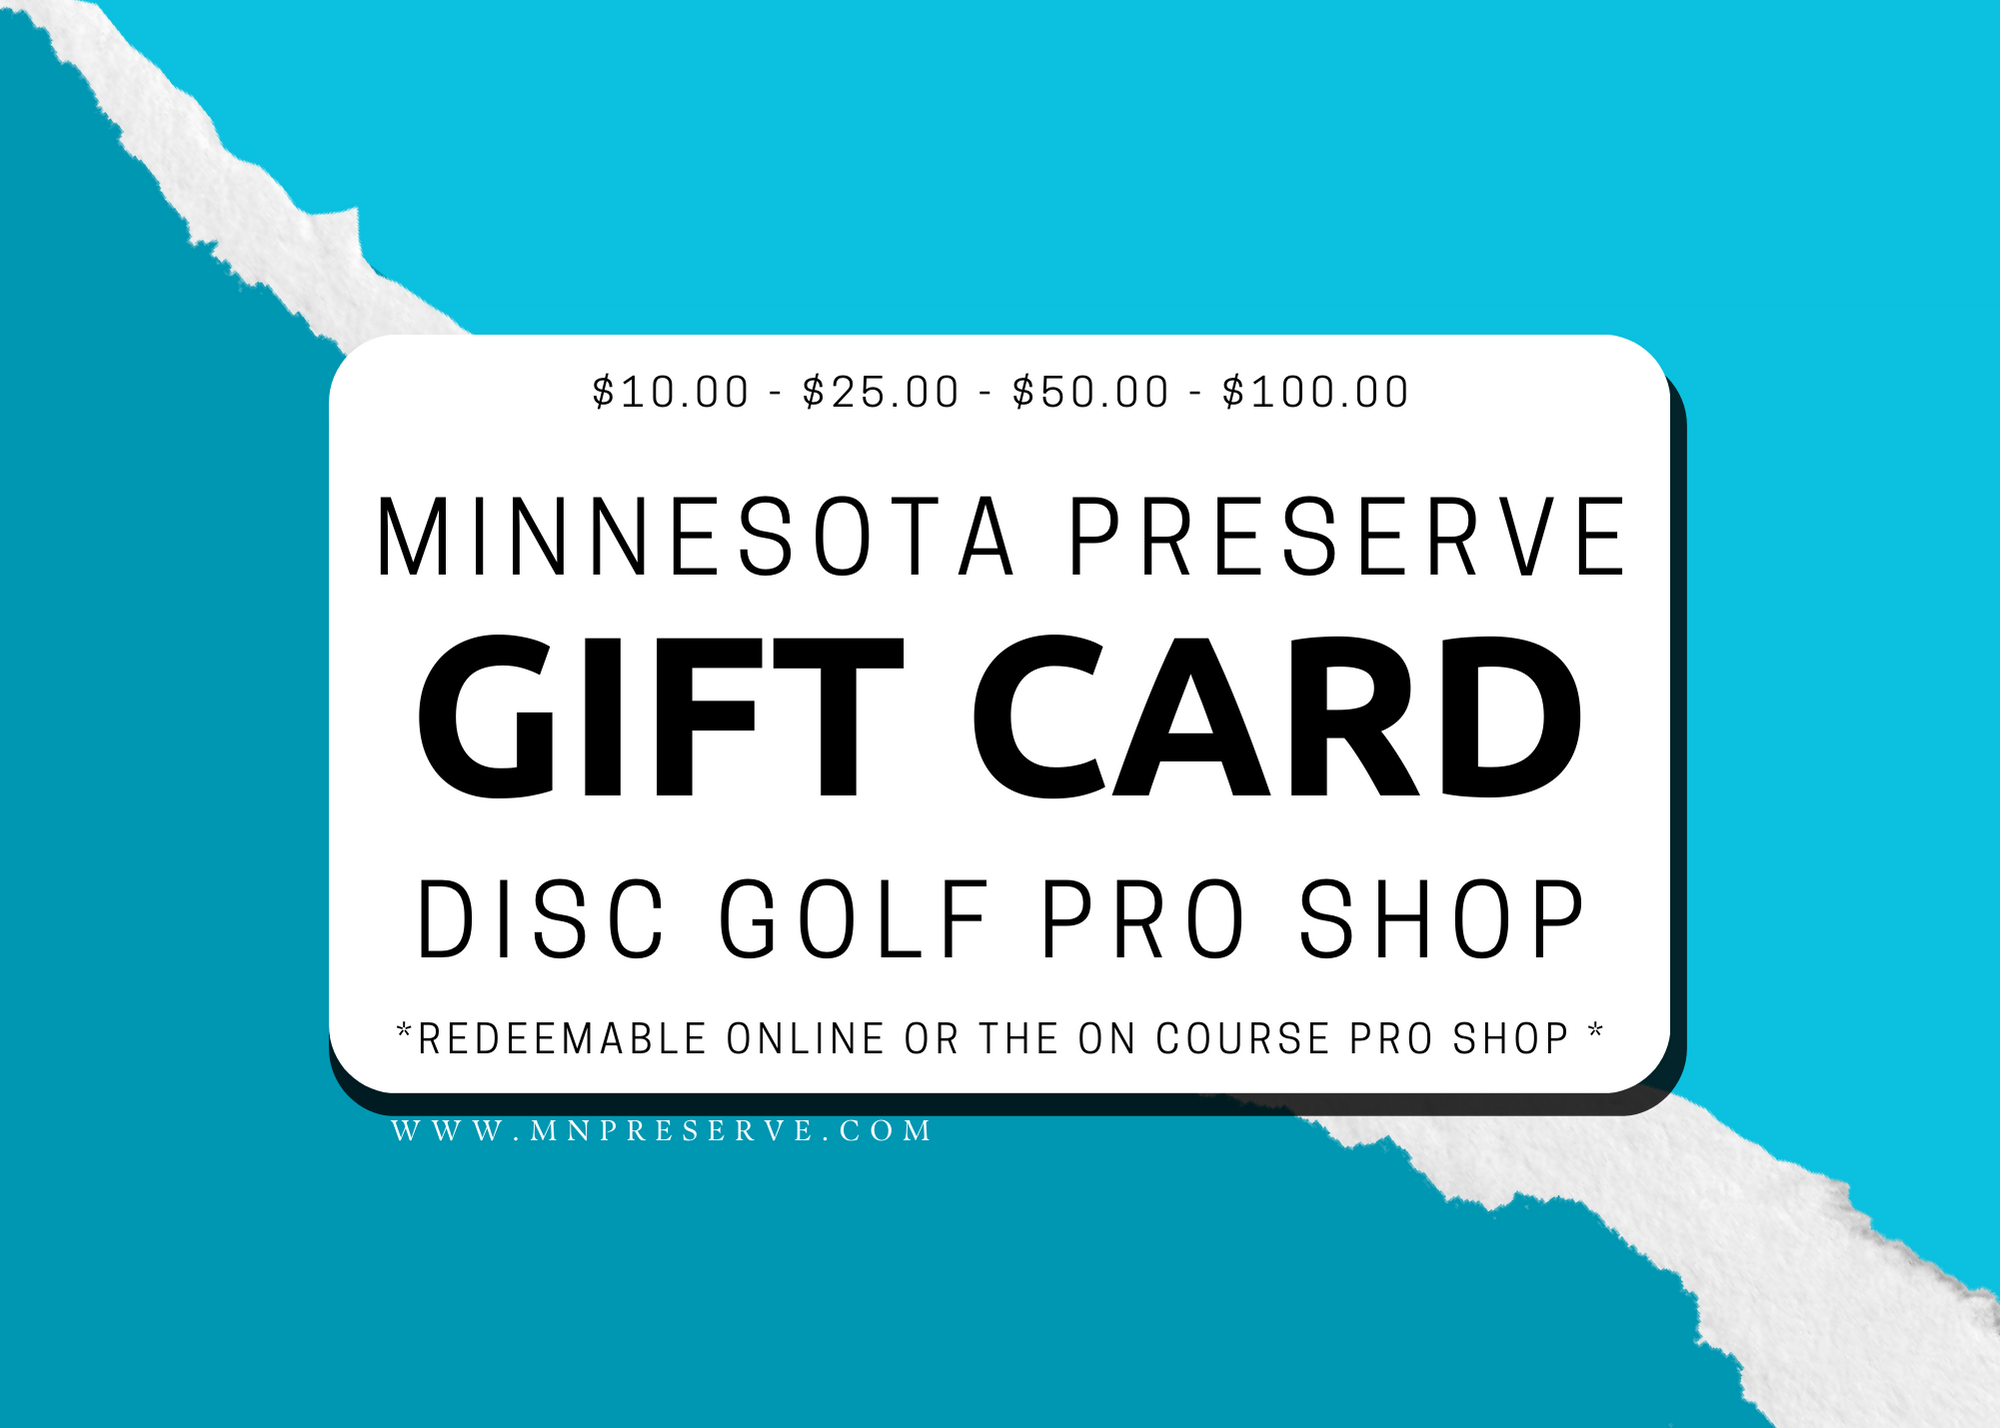 Minnesota Preserve Gift Card